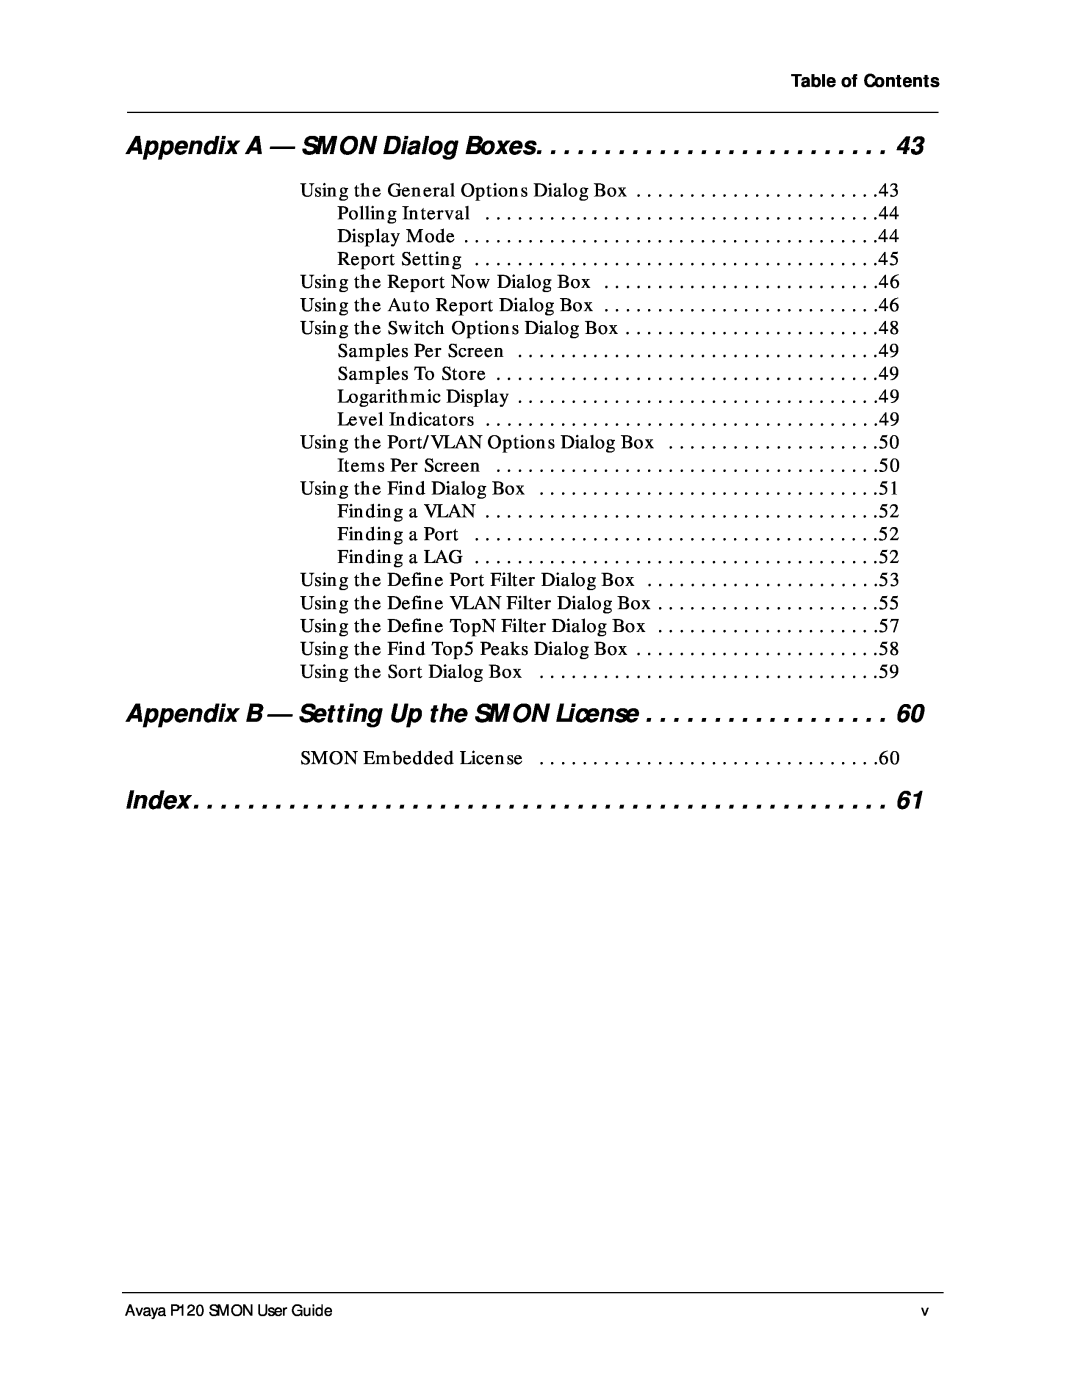 Avaya P120 SMON manual Appendix A - SMON Dialog Boxes, Appendix B - Setting Up the SMON License, Index 